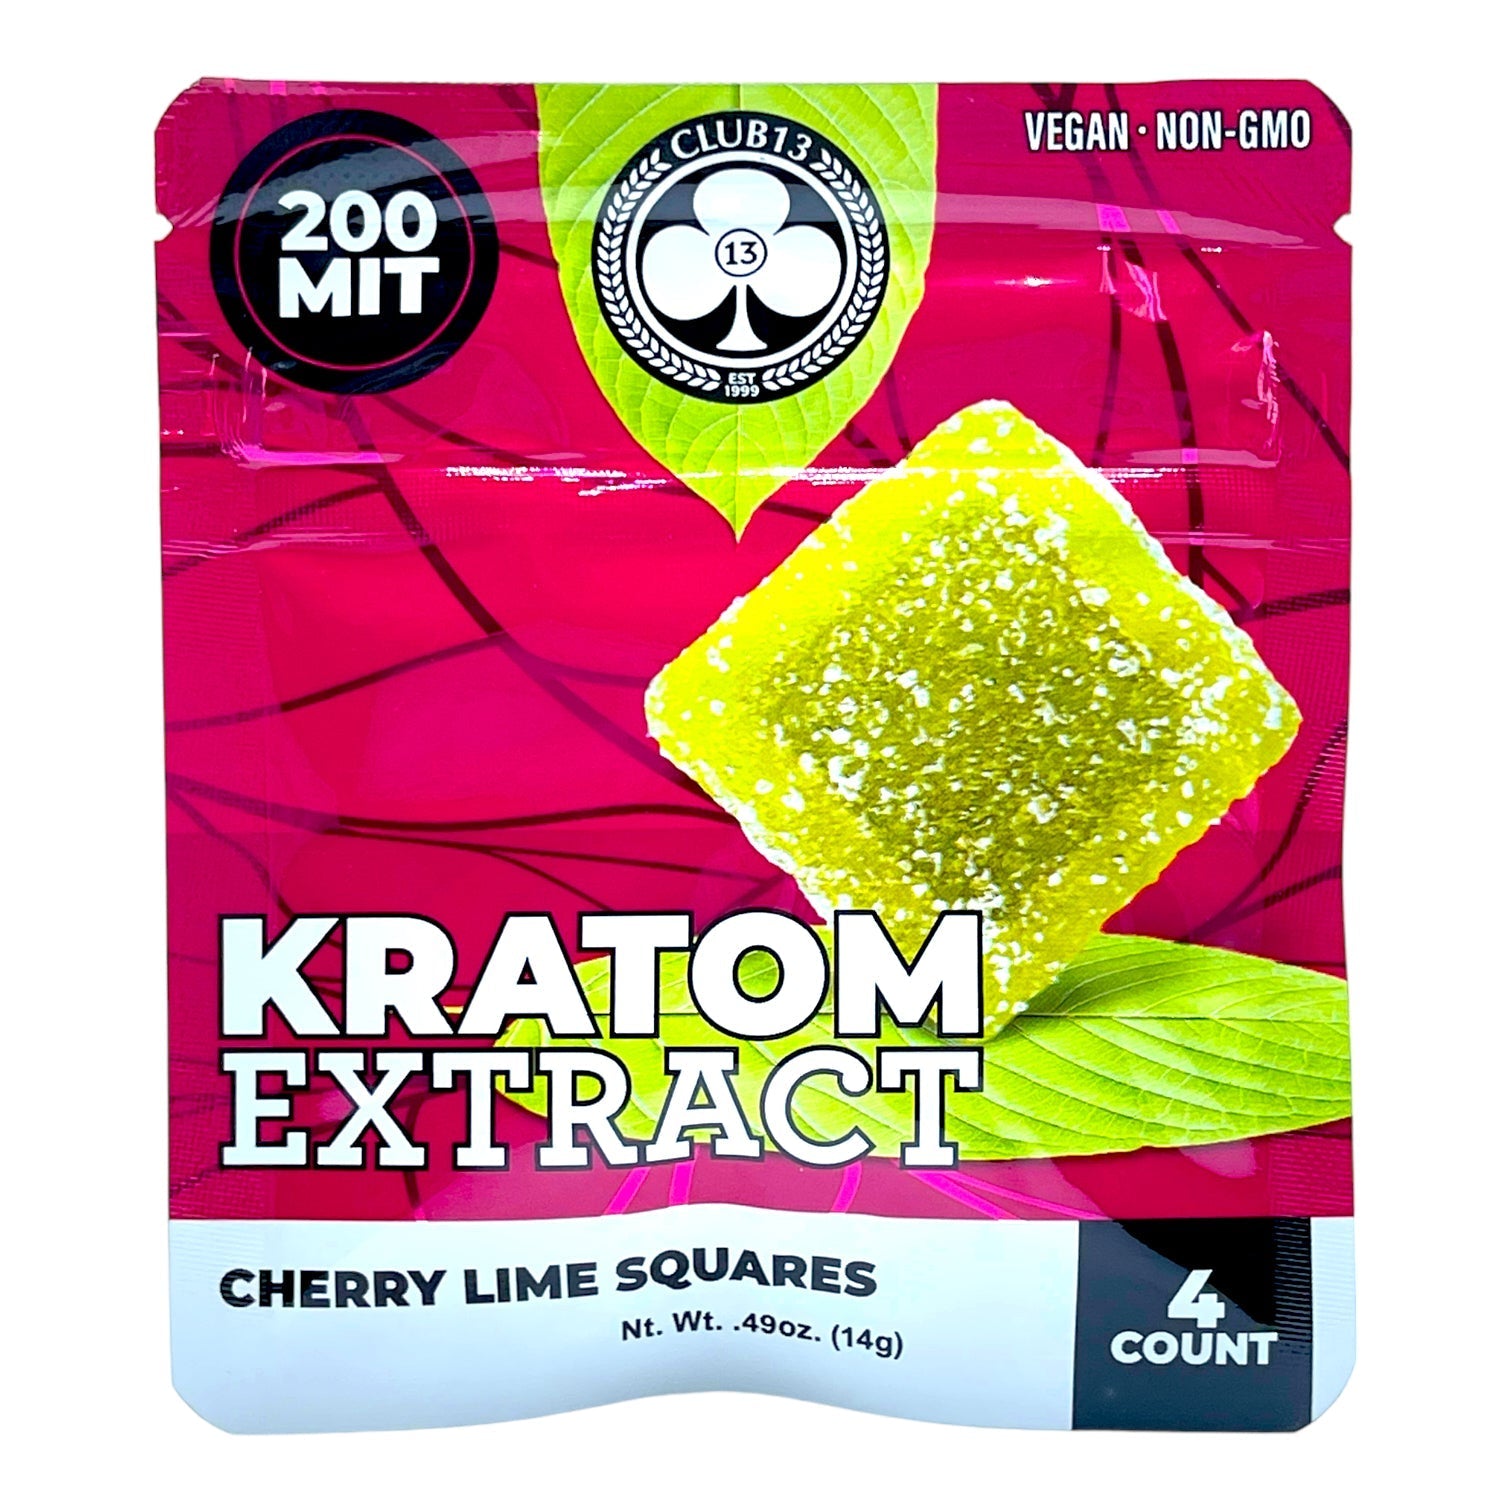 Club 13 Kratom Extract Gummy Squares - 200 MIT